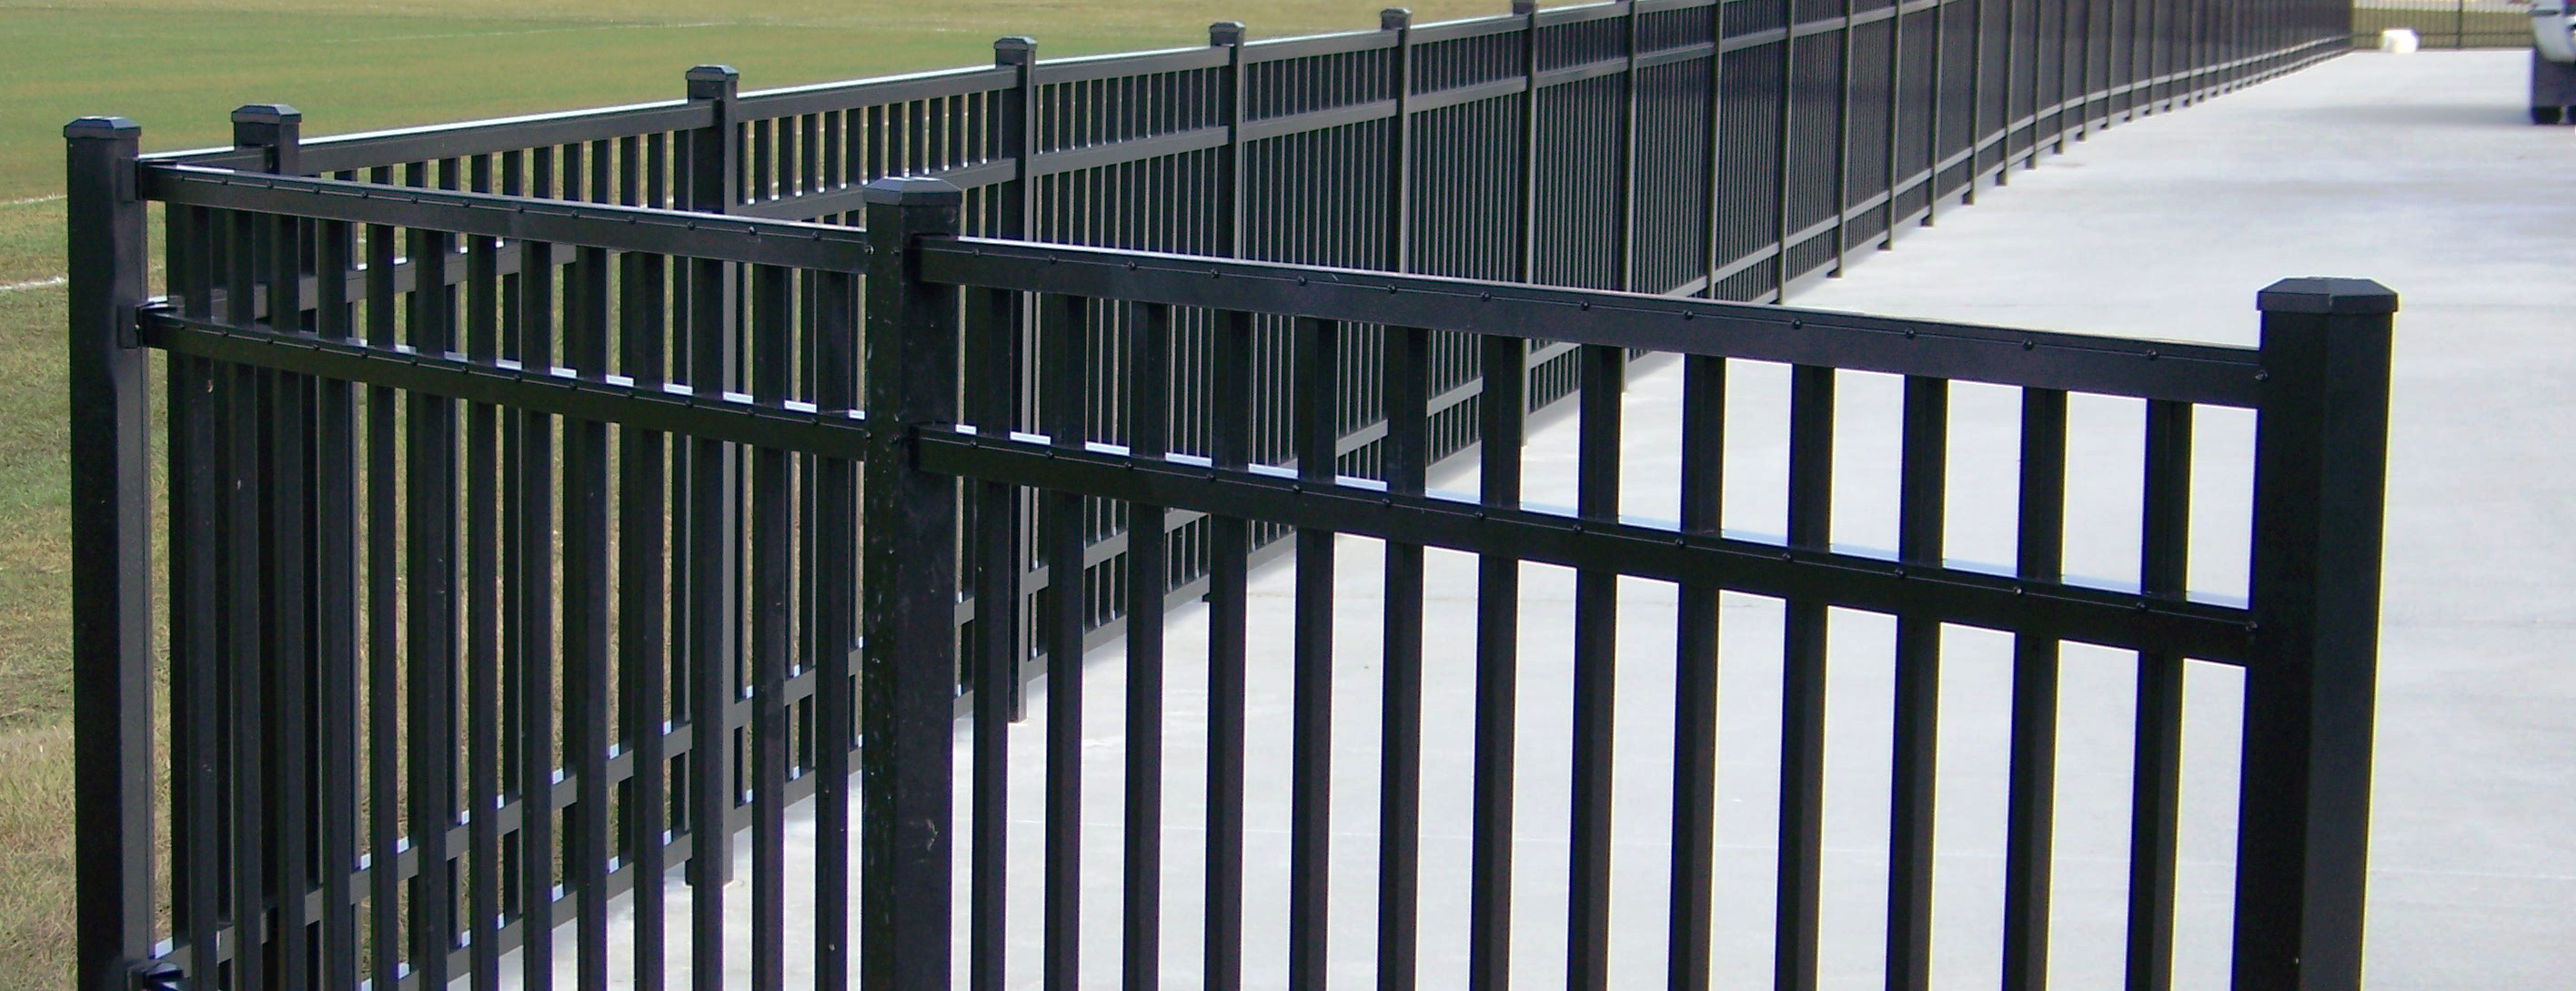 SDF - Metal Fence 1.png